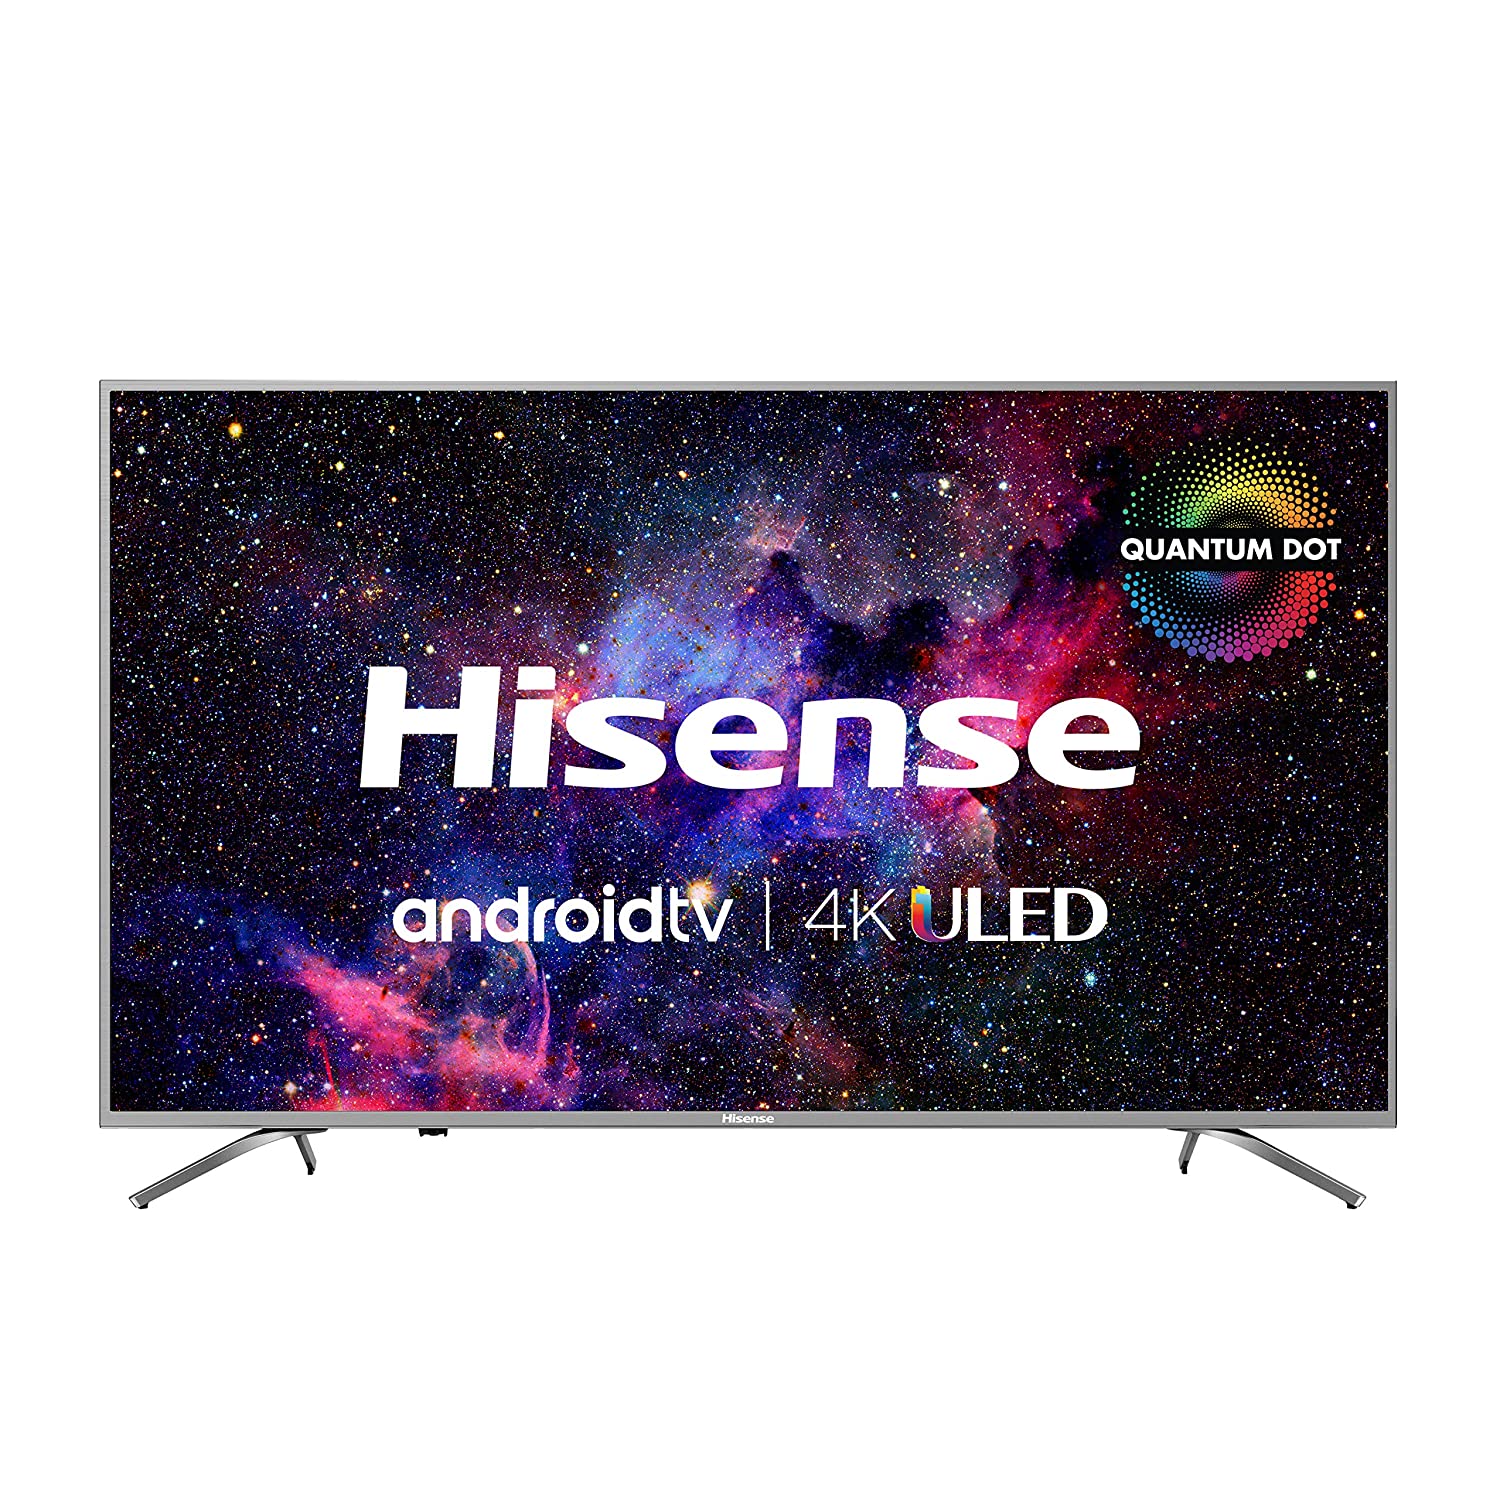 Hisense 55 4k Uled™ Quantum Dot Android Smart Tv Unwired 5355